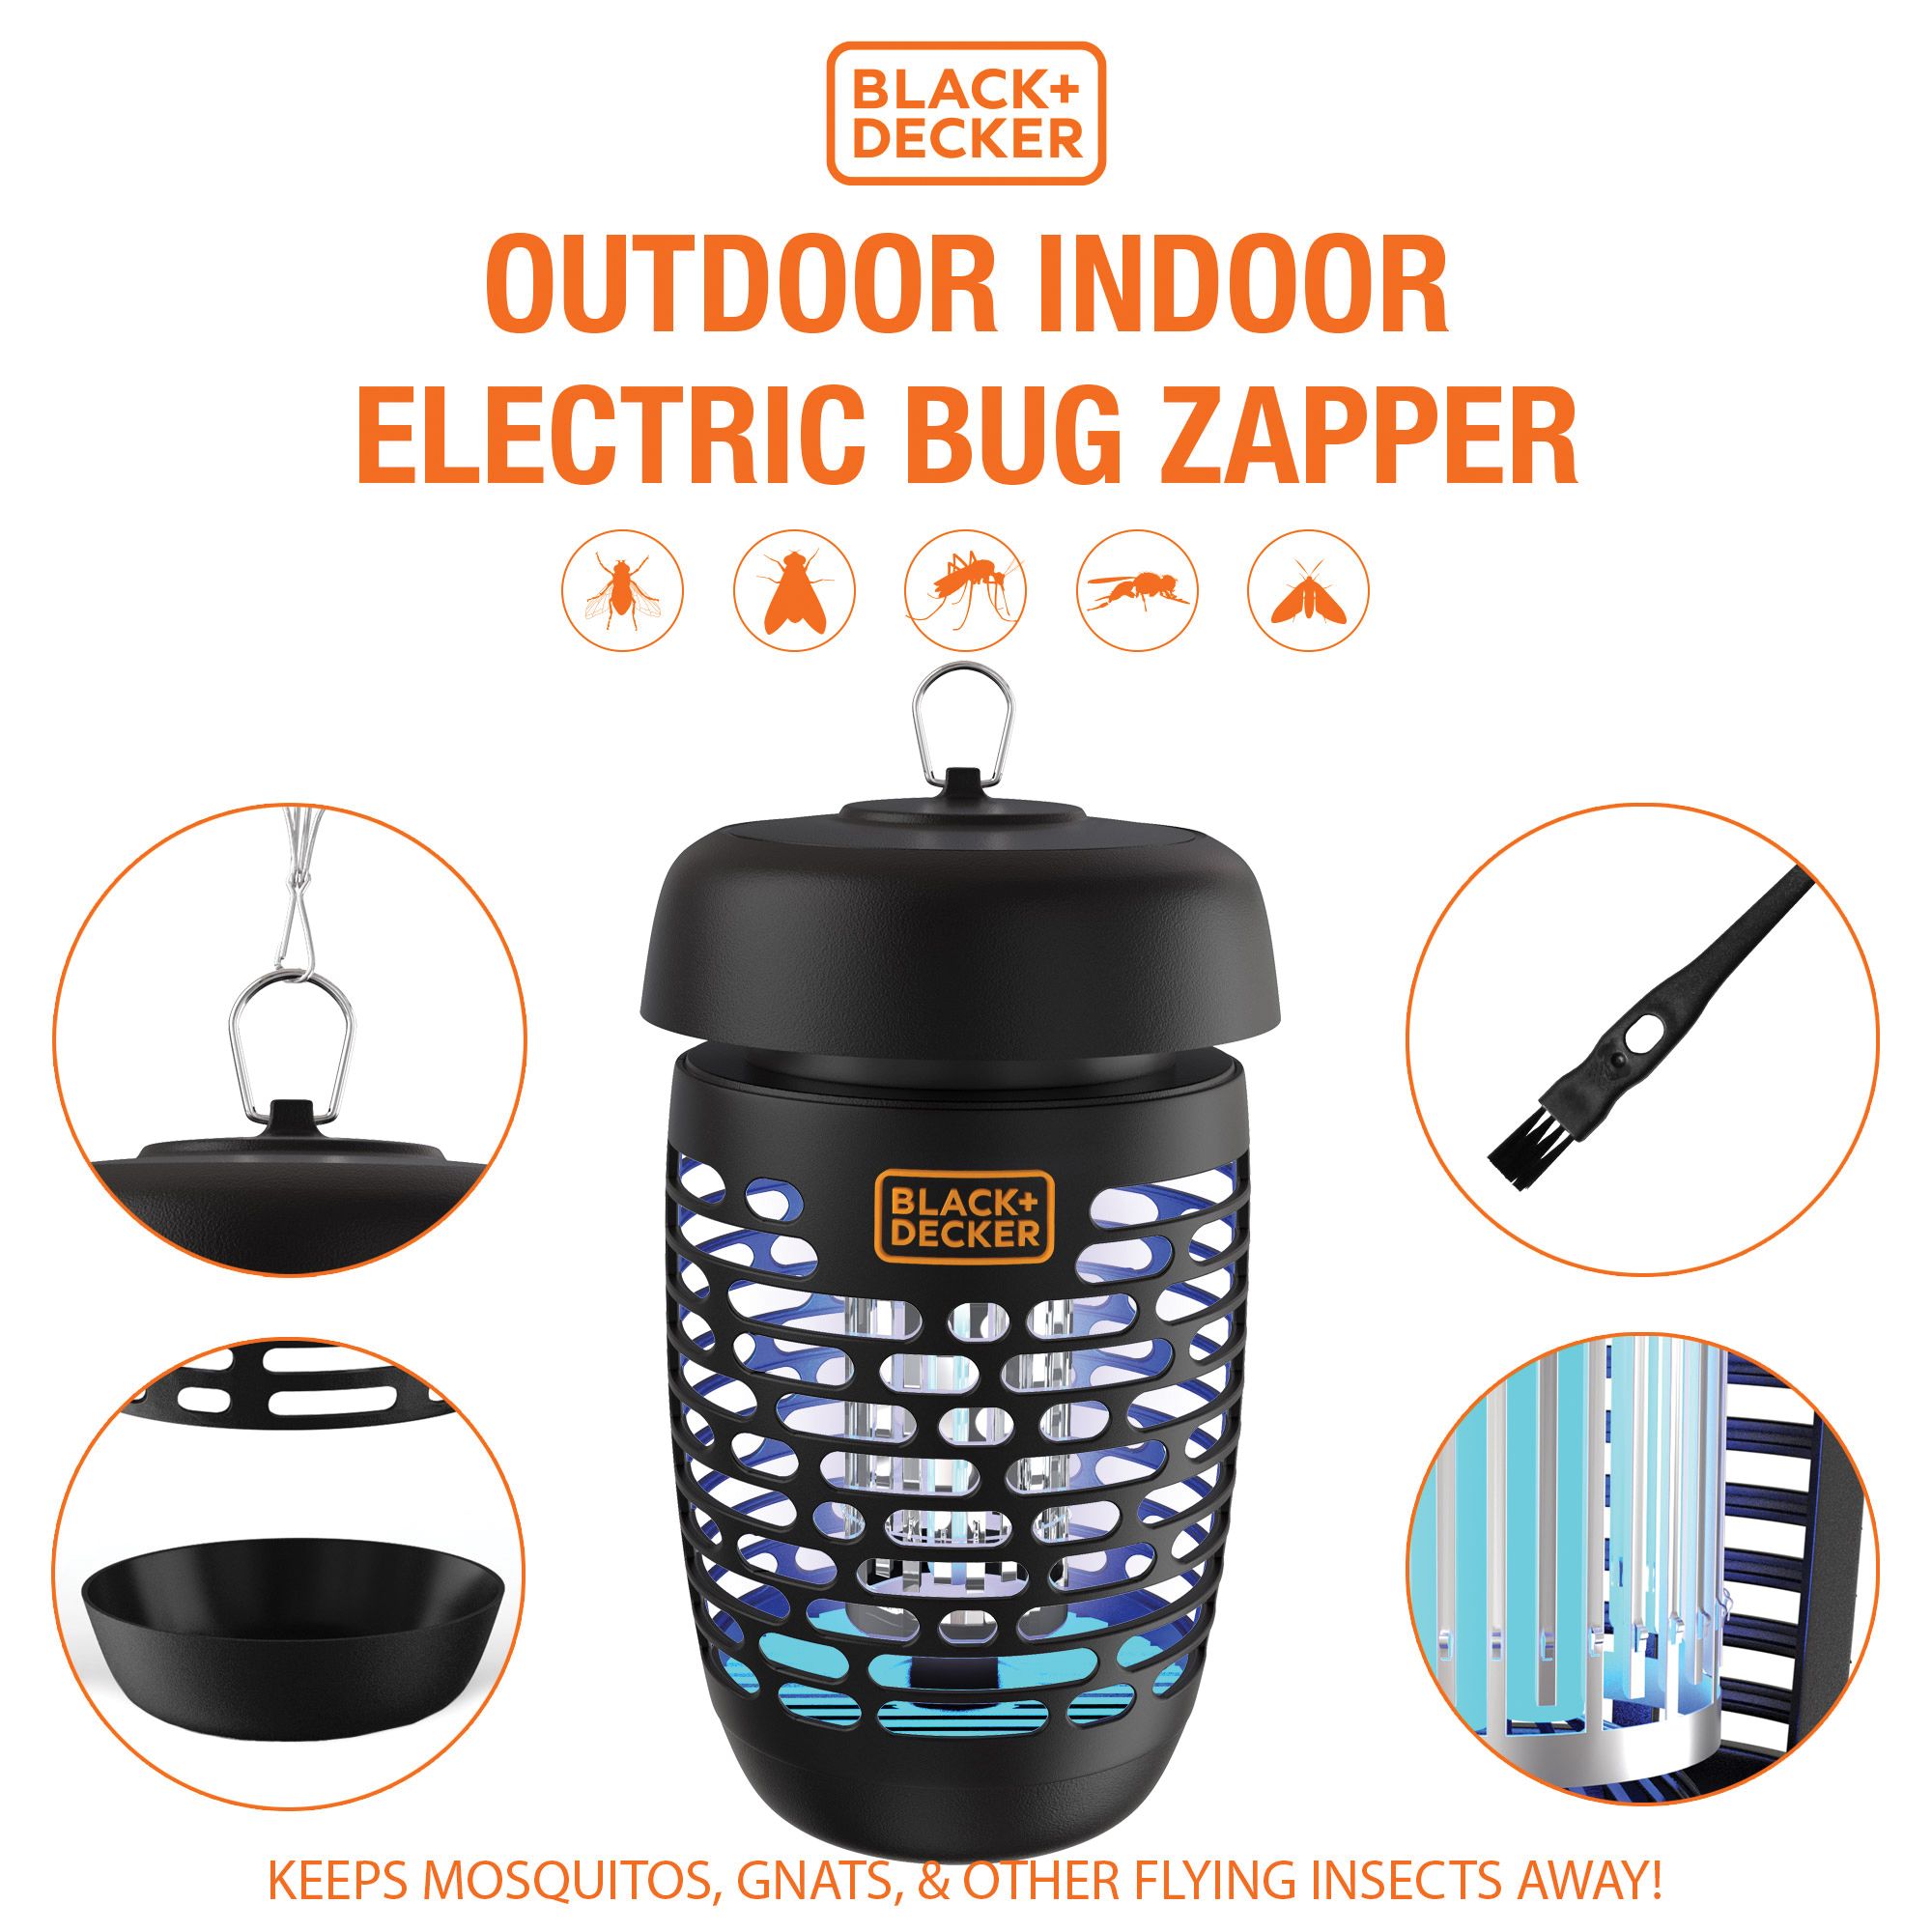  BLACK+DECKER Bug Zapper, Electric UV Insect Catcher